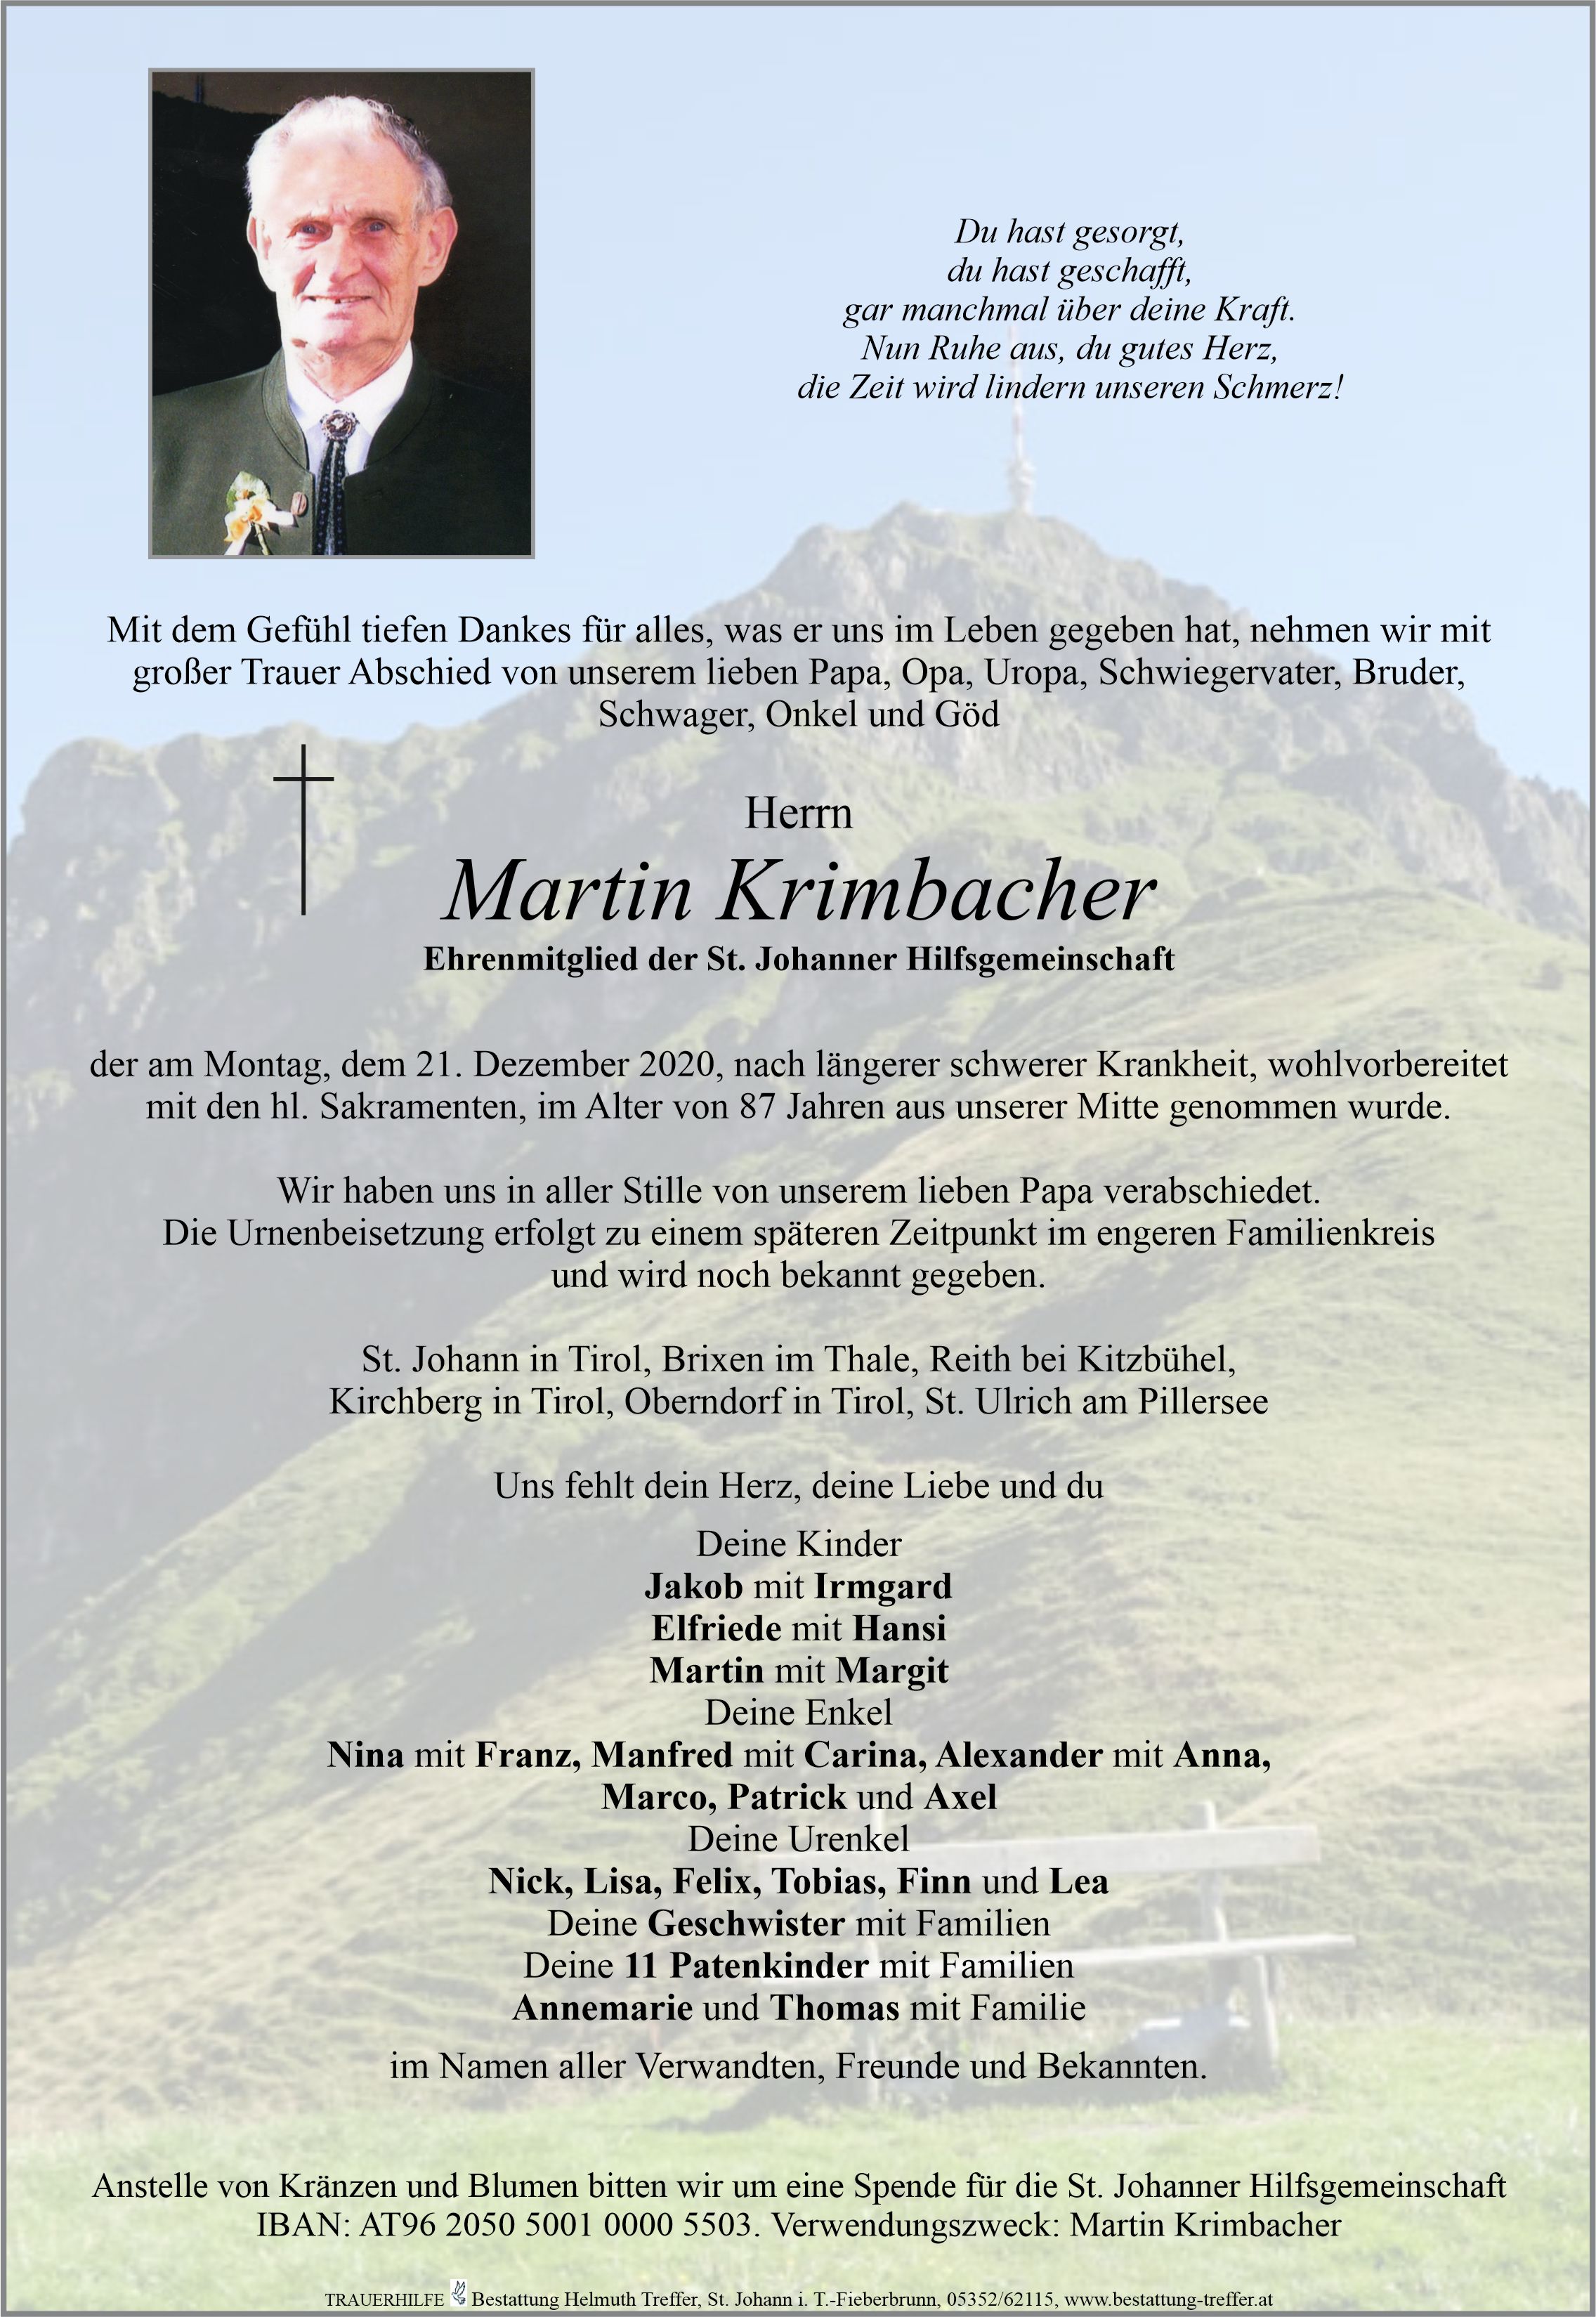 Martin Krimbacher